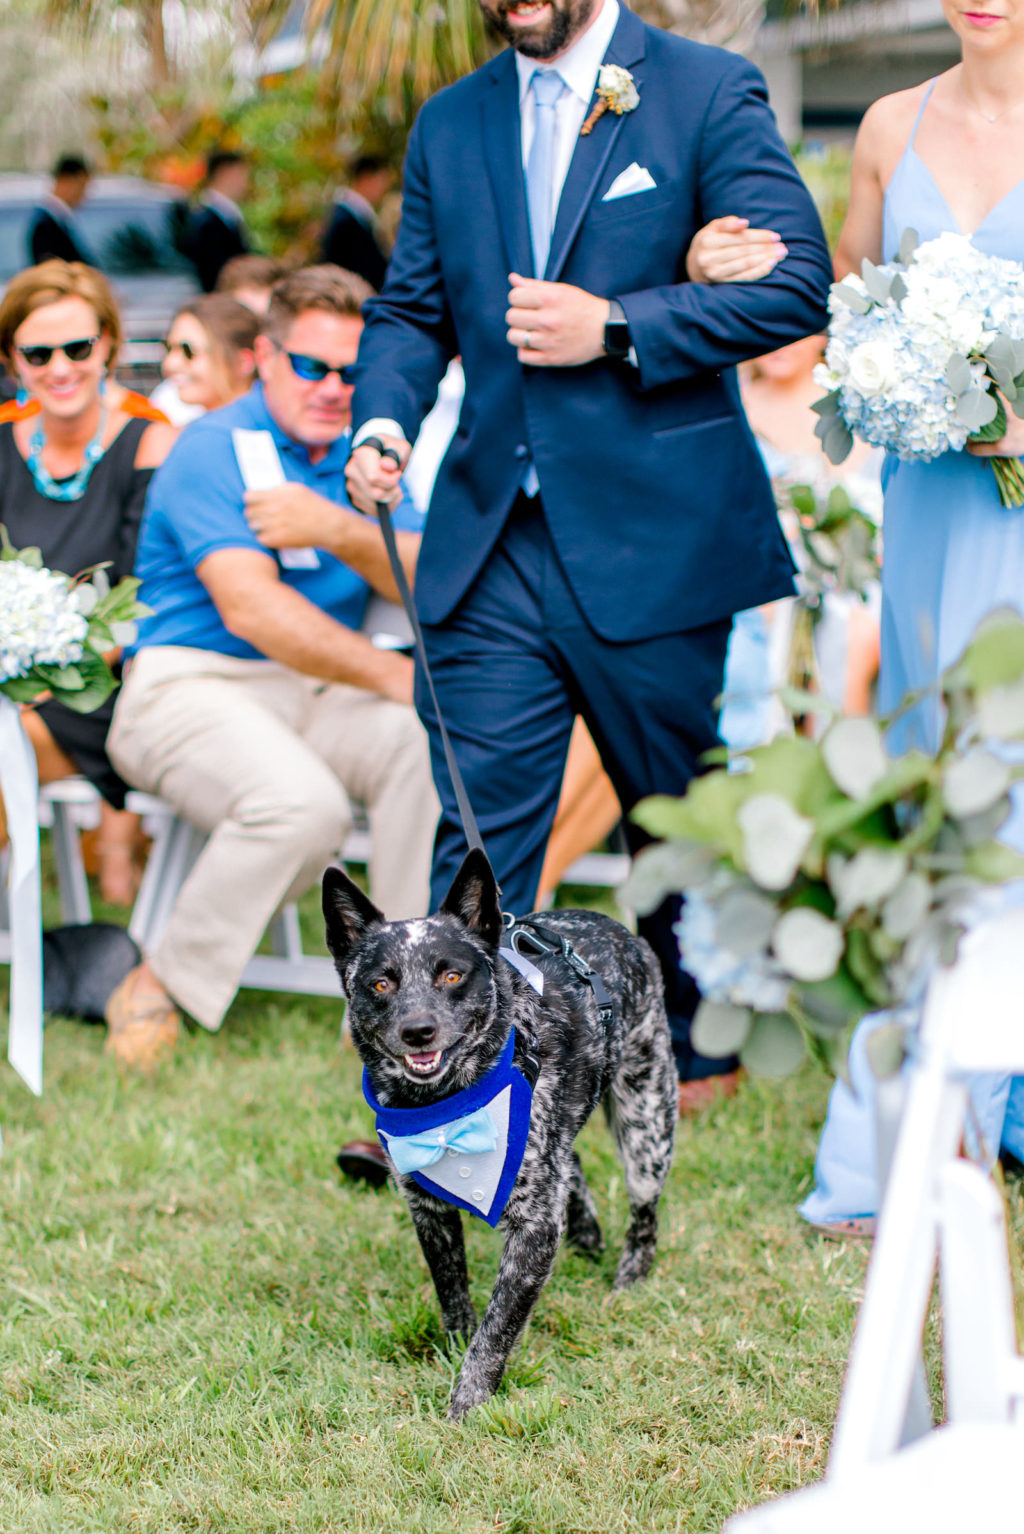 Dog Walking Down the Wedding Aisle Portrait | Dog as Ring Bearer Wedding Idea